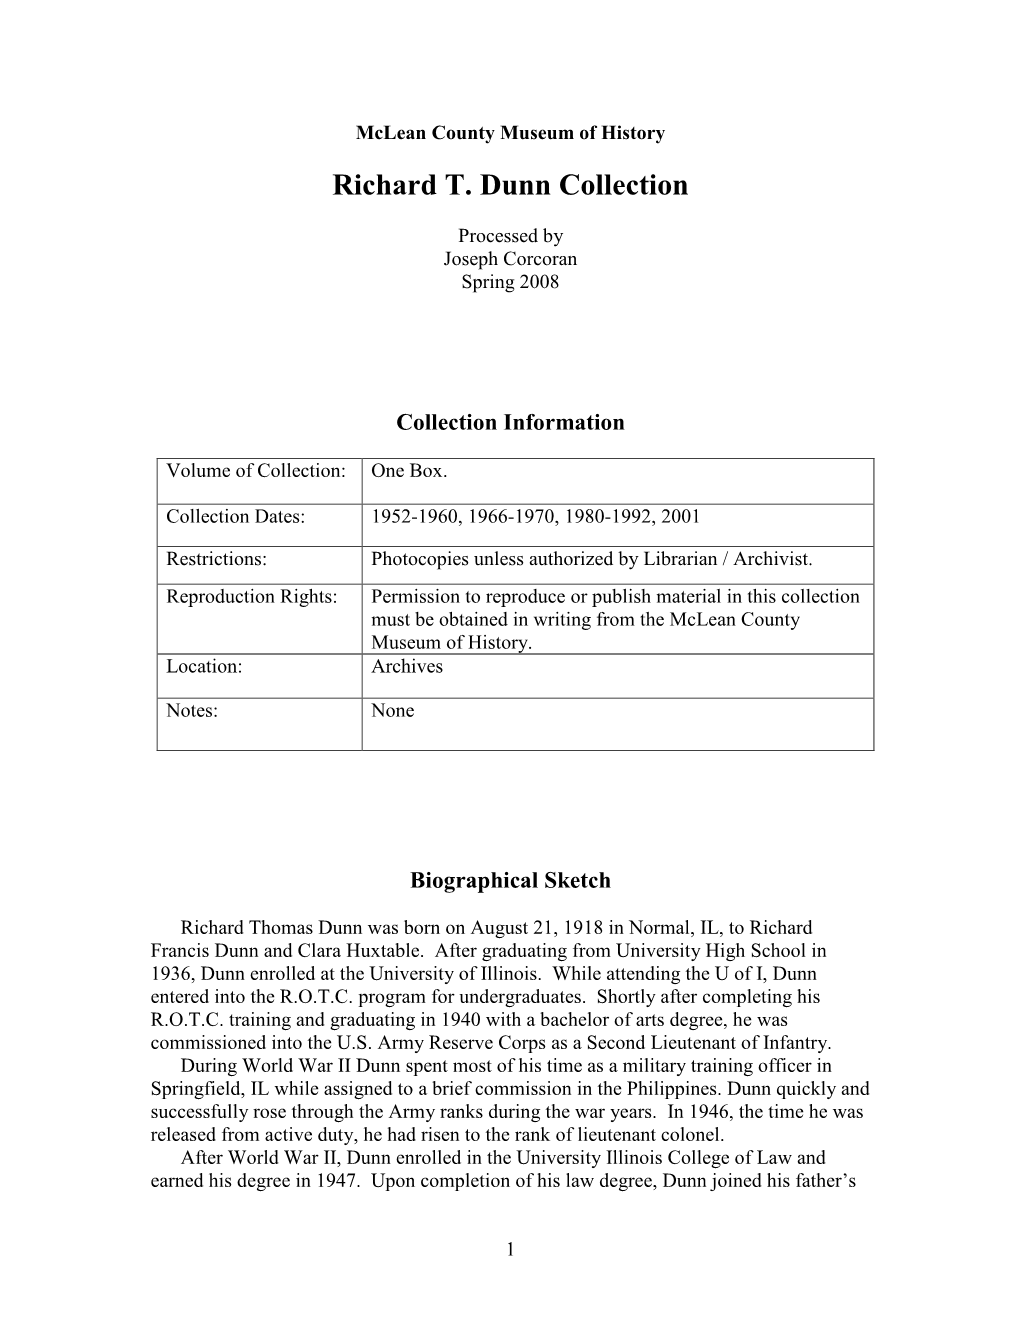 Richard T. Dunn Collection